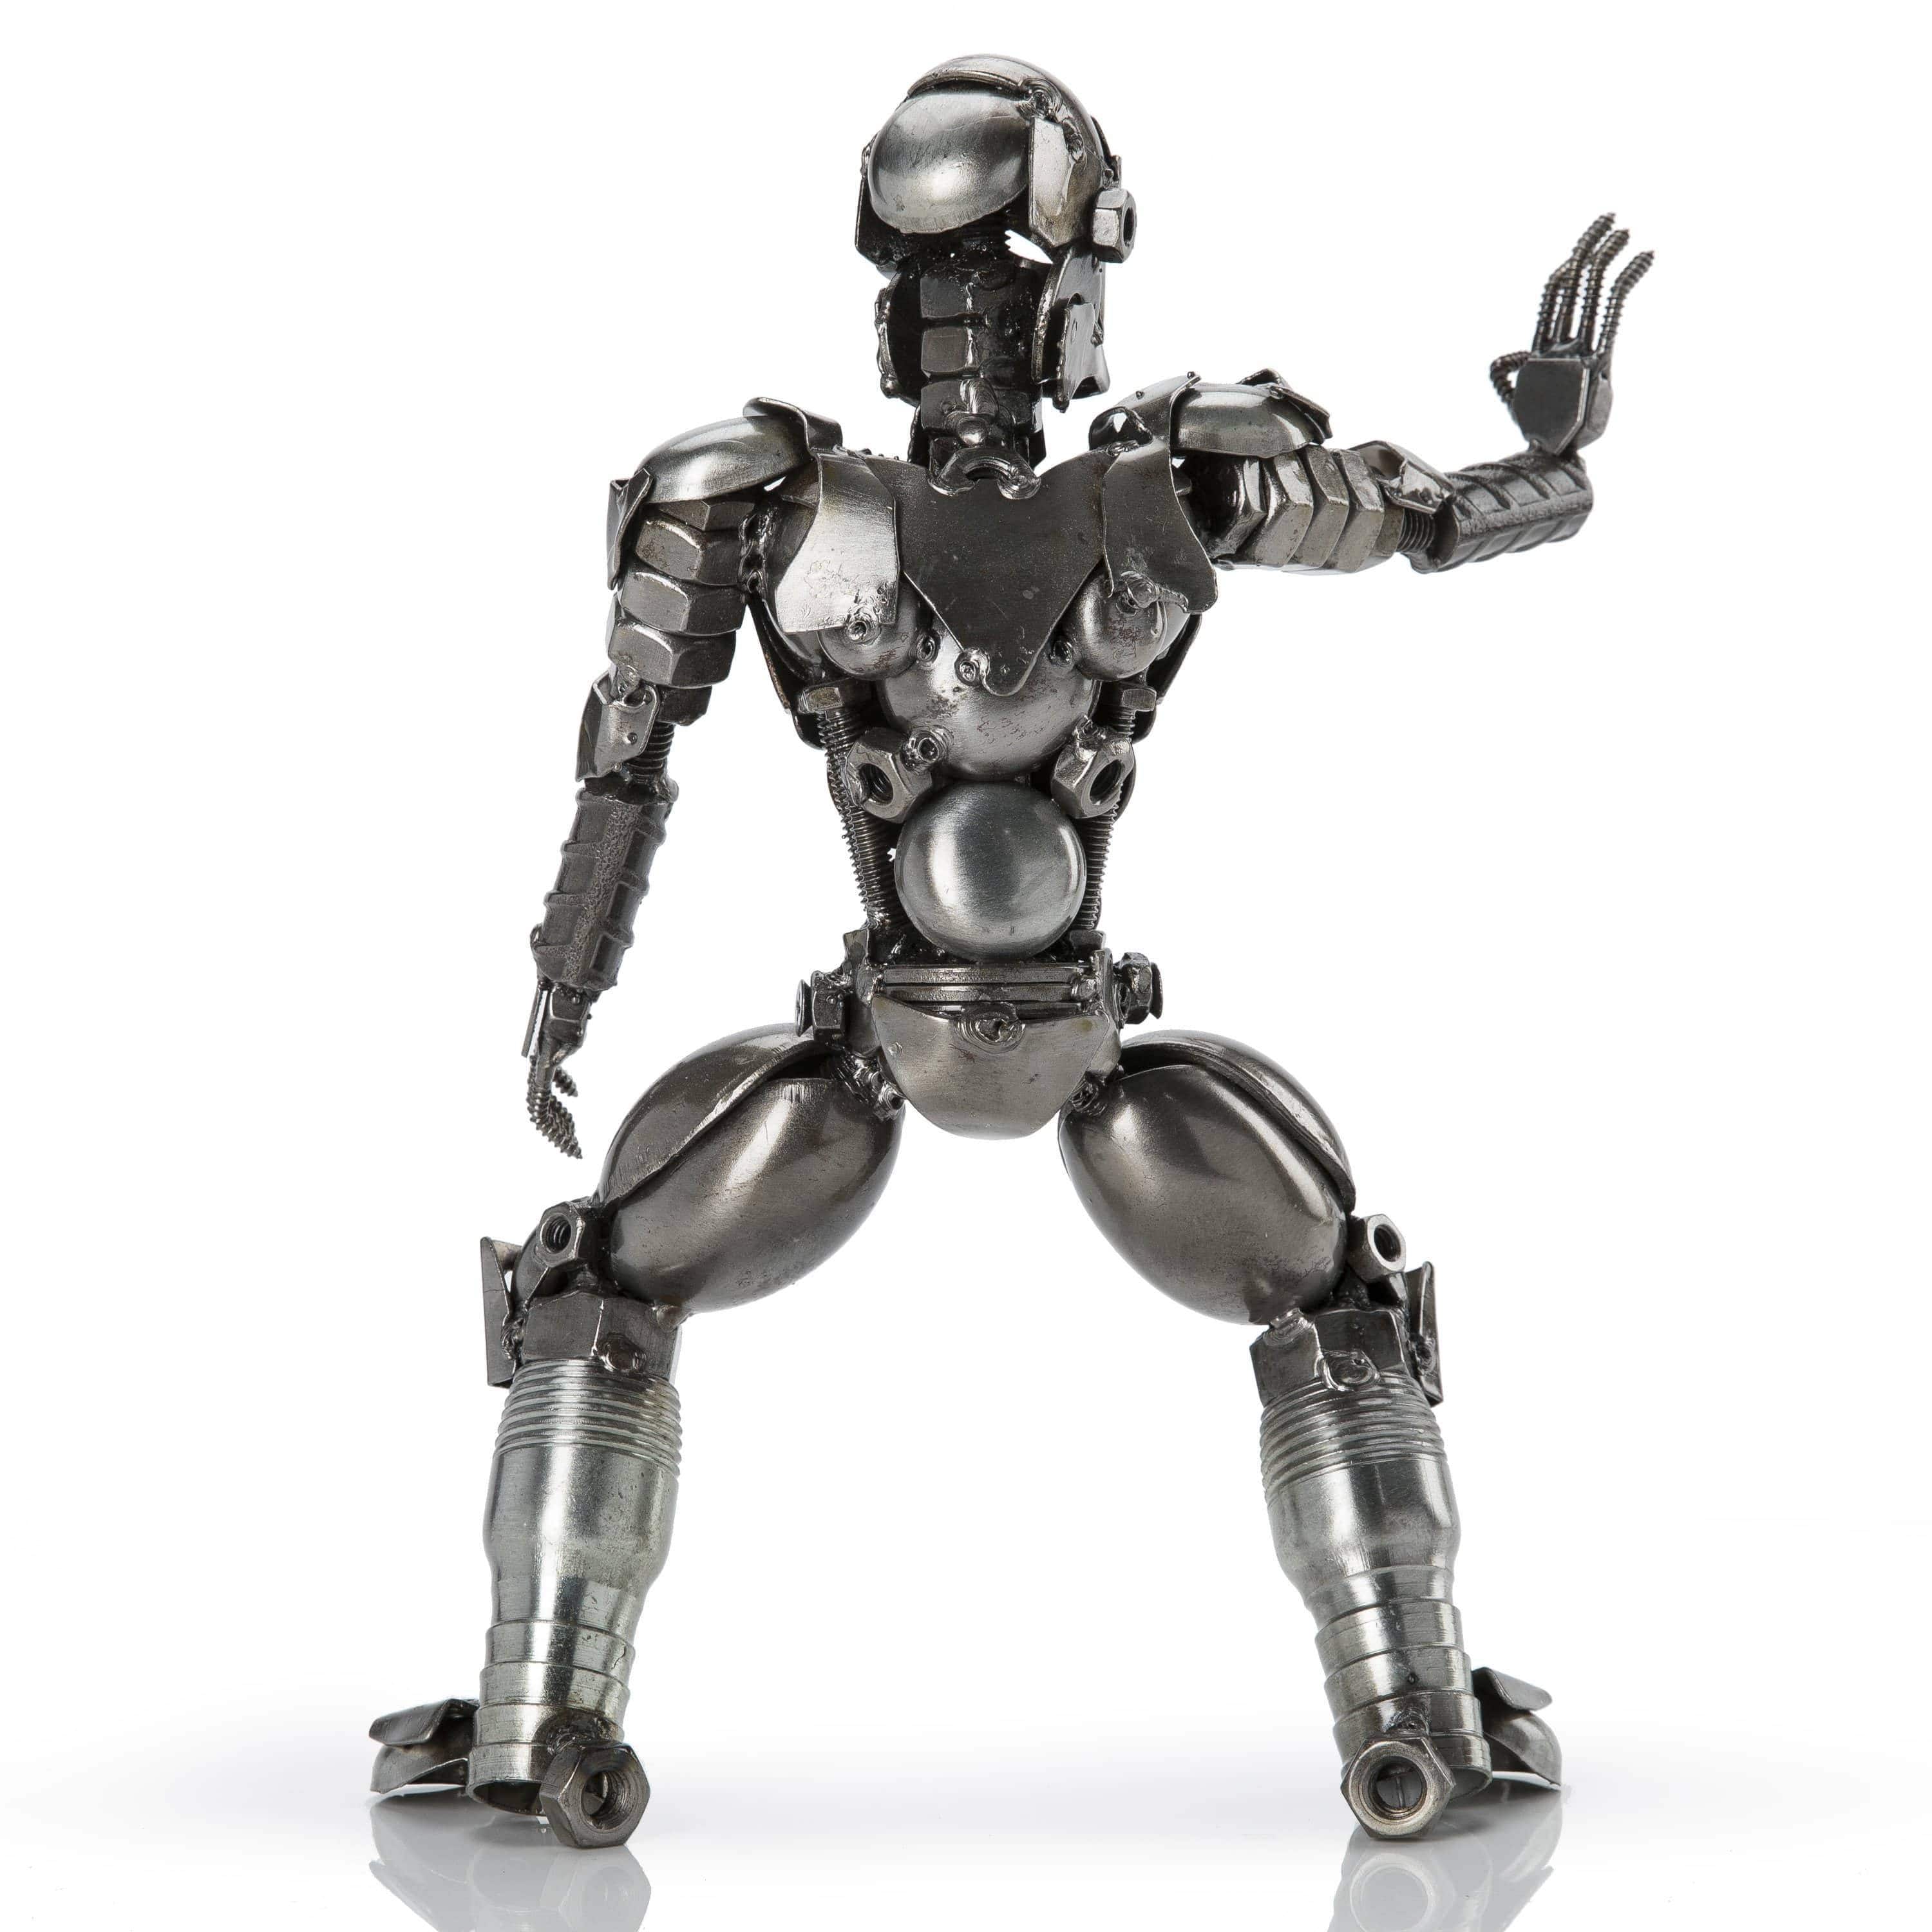 Kalifano Recycled Metal Art Iron Man Inspired Recycled Metal Sculpture RMS-700IMA-N